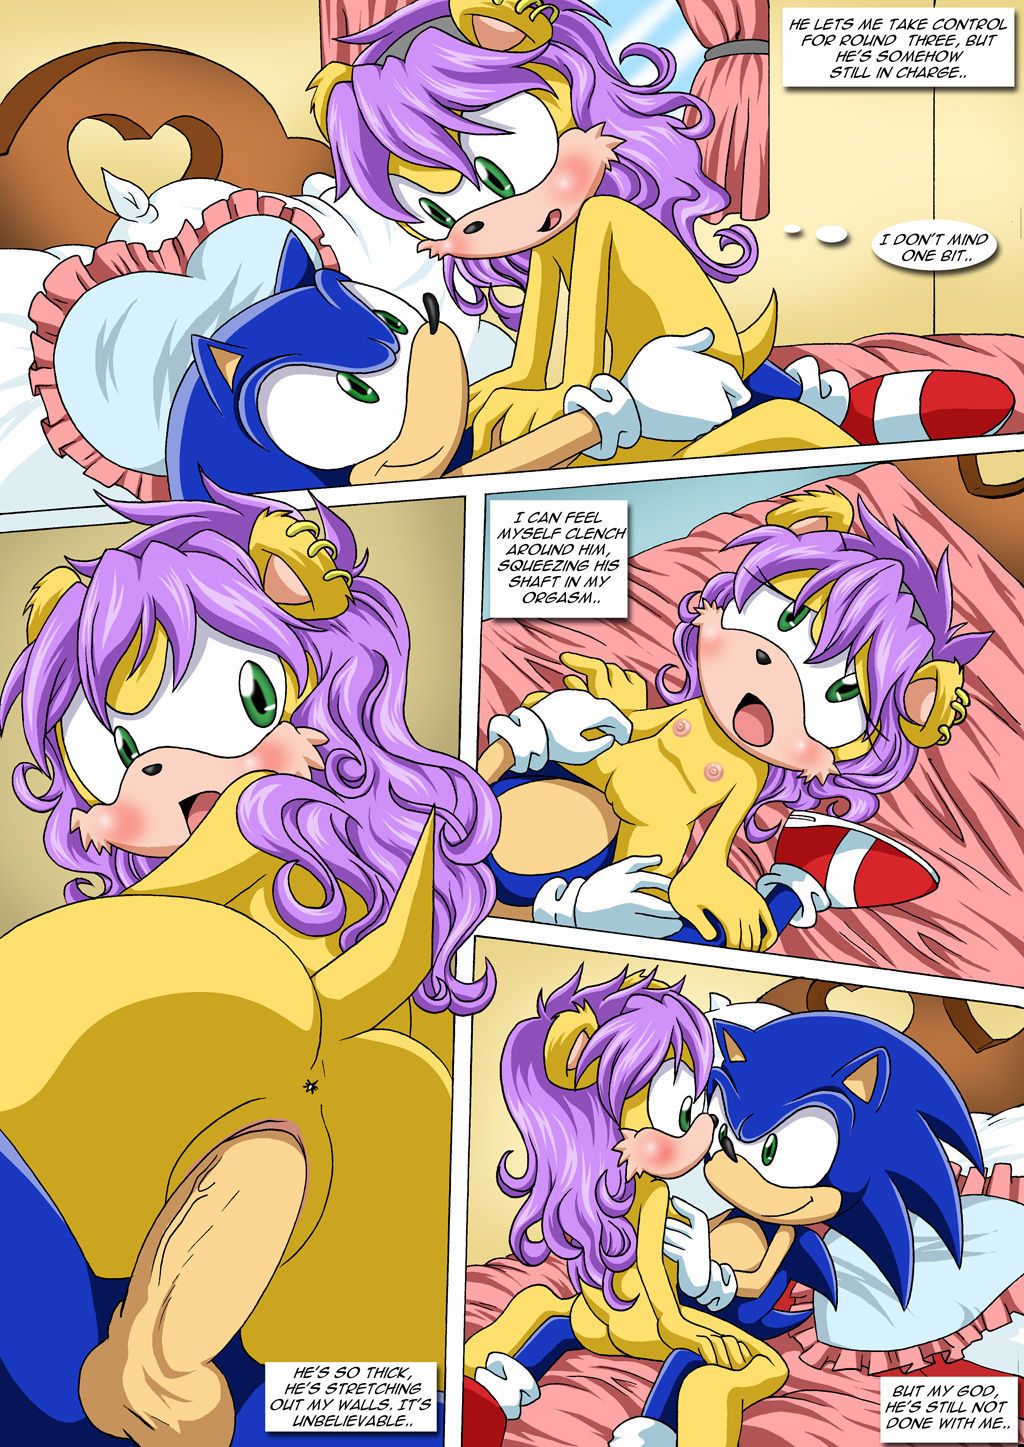 Palcomix Betrayal (Sonic the Hedgehog) - part 2